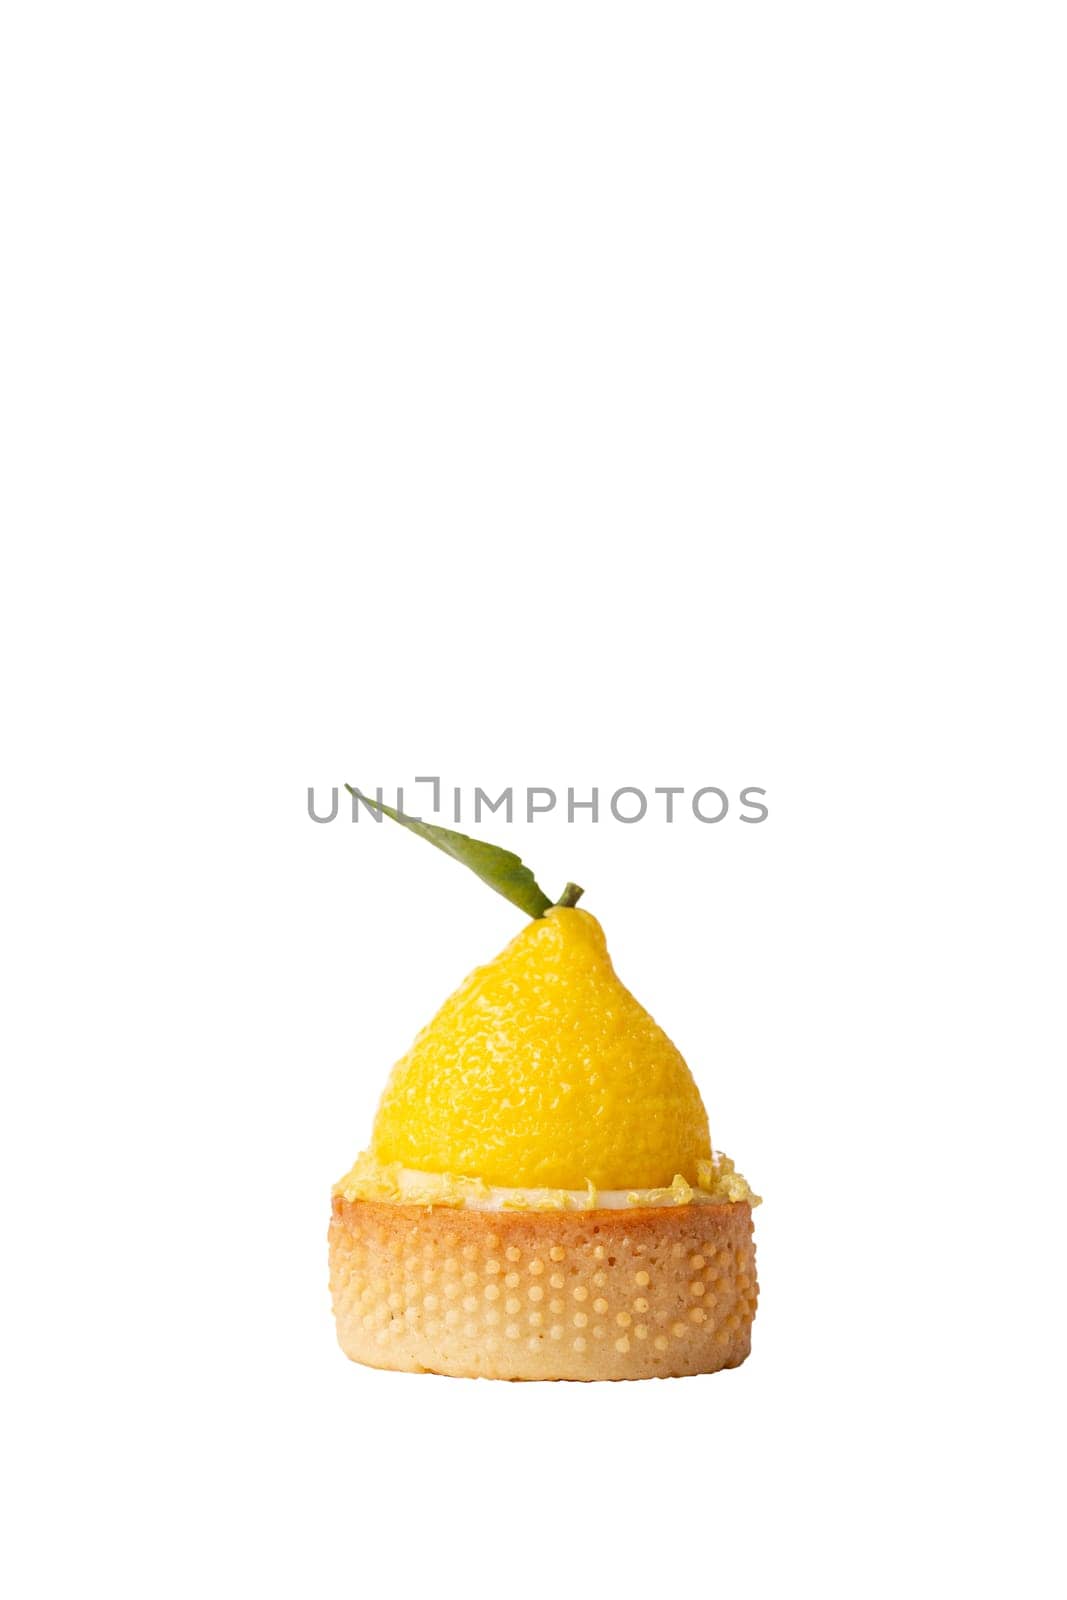 dessert tart in the shape of a lemon on a transparent background by Pukhovskiy